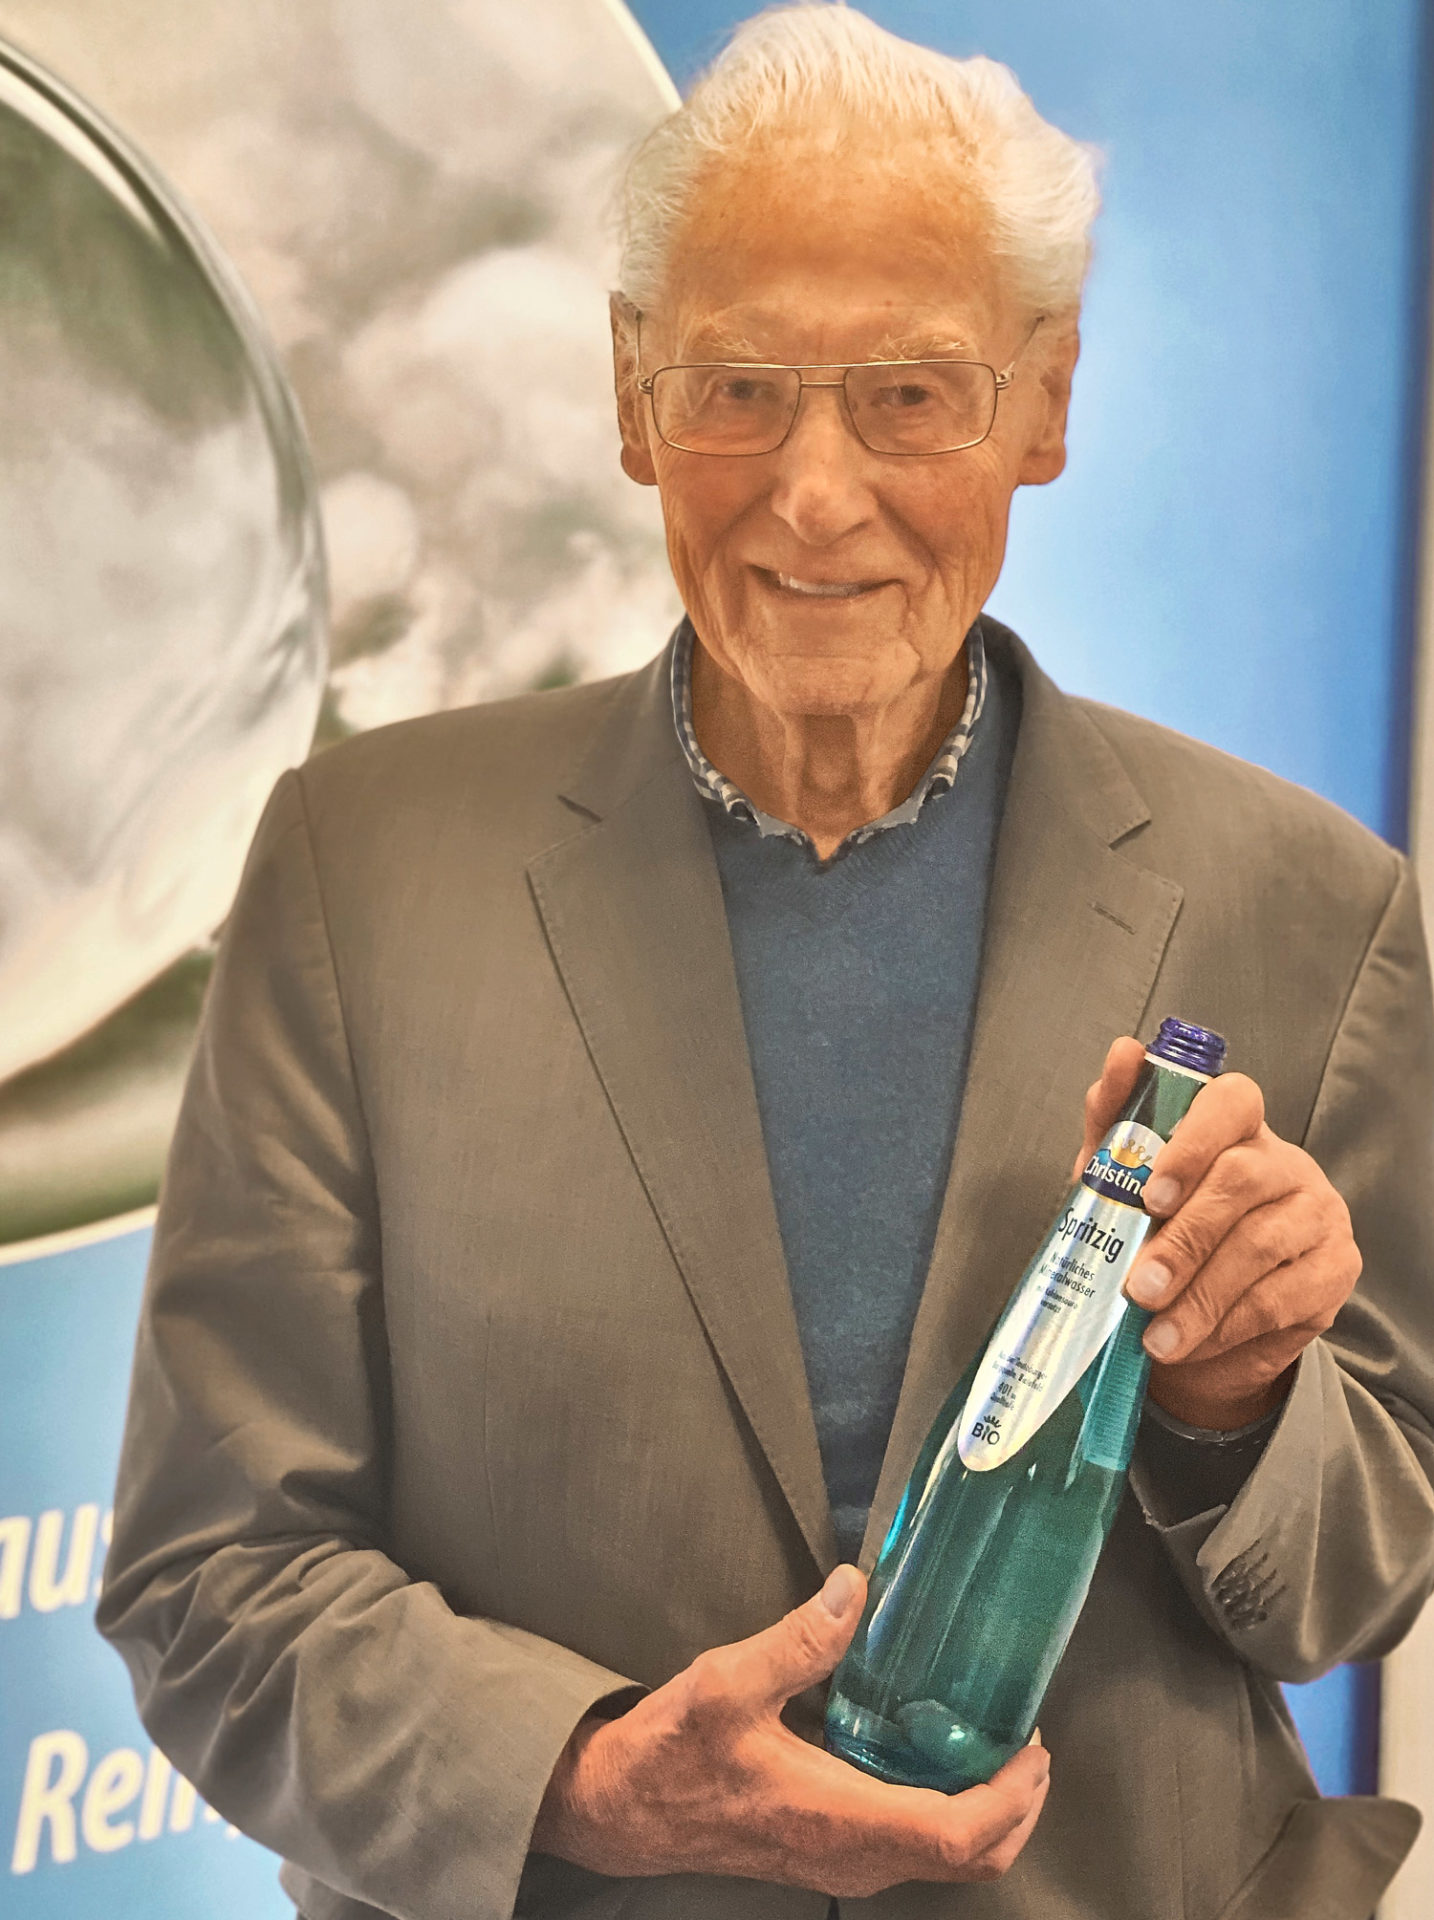 Gehring-Bunte gratuliert: Dr. Paul Gehring wird 90 Jahre